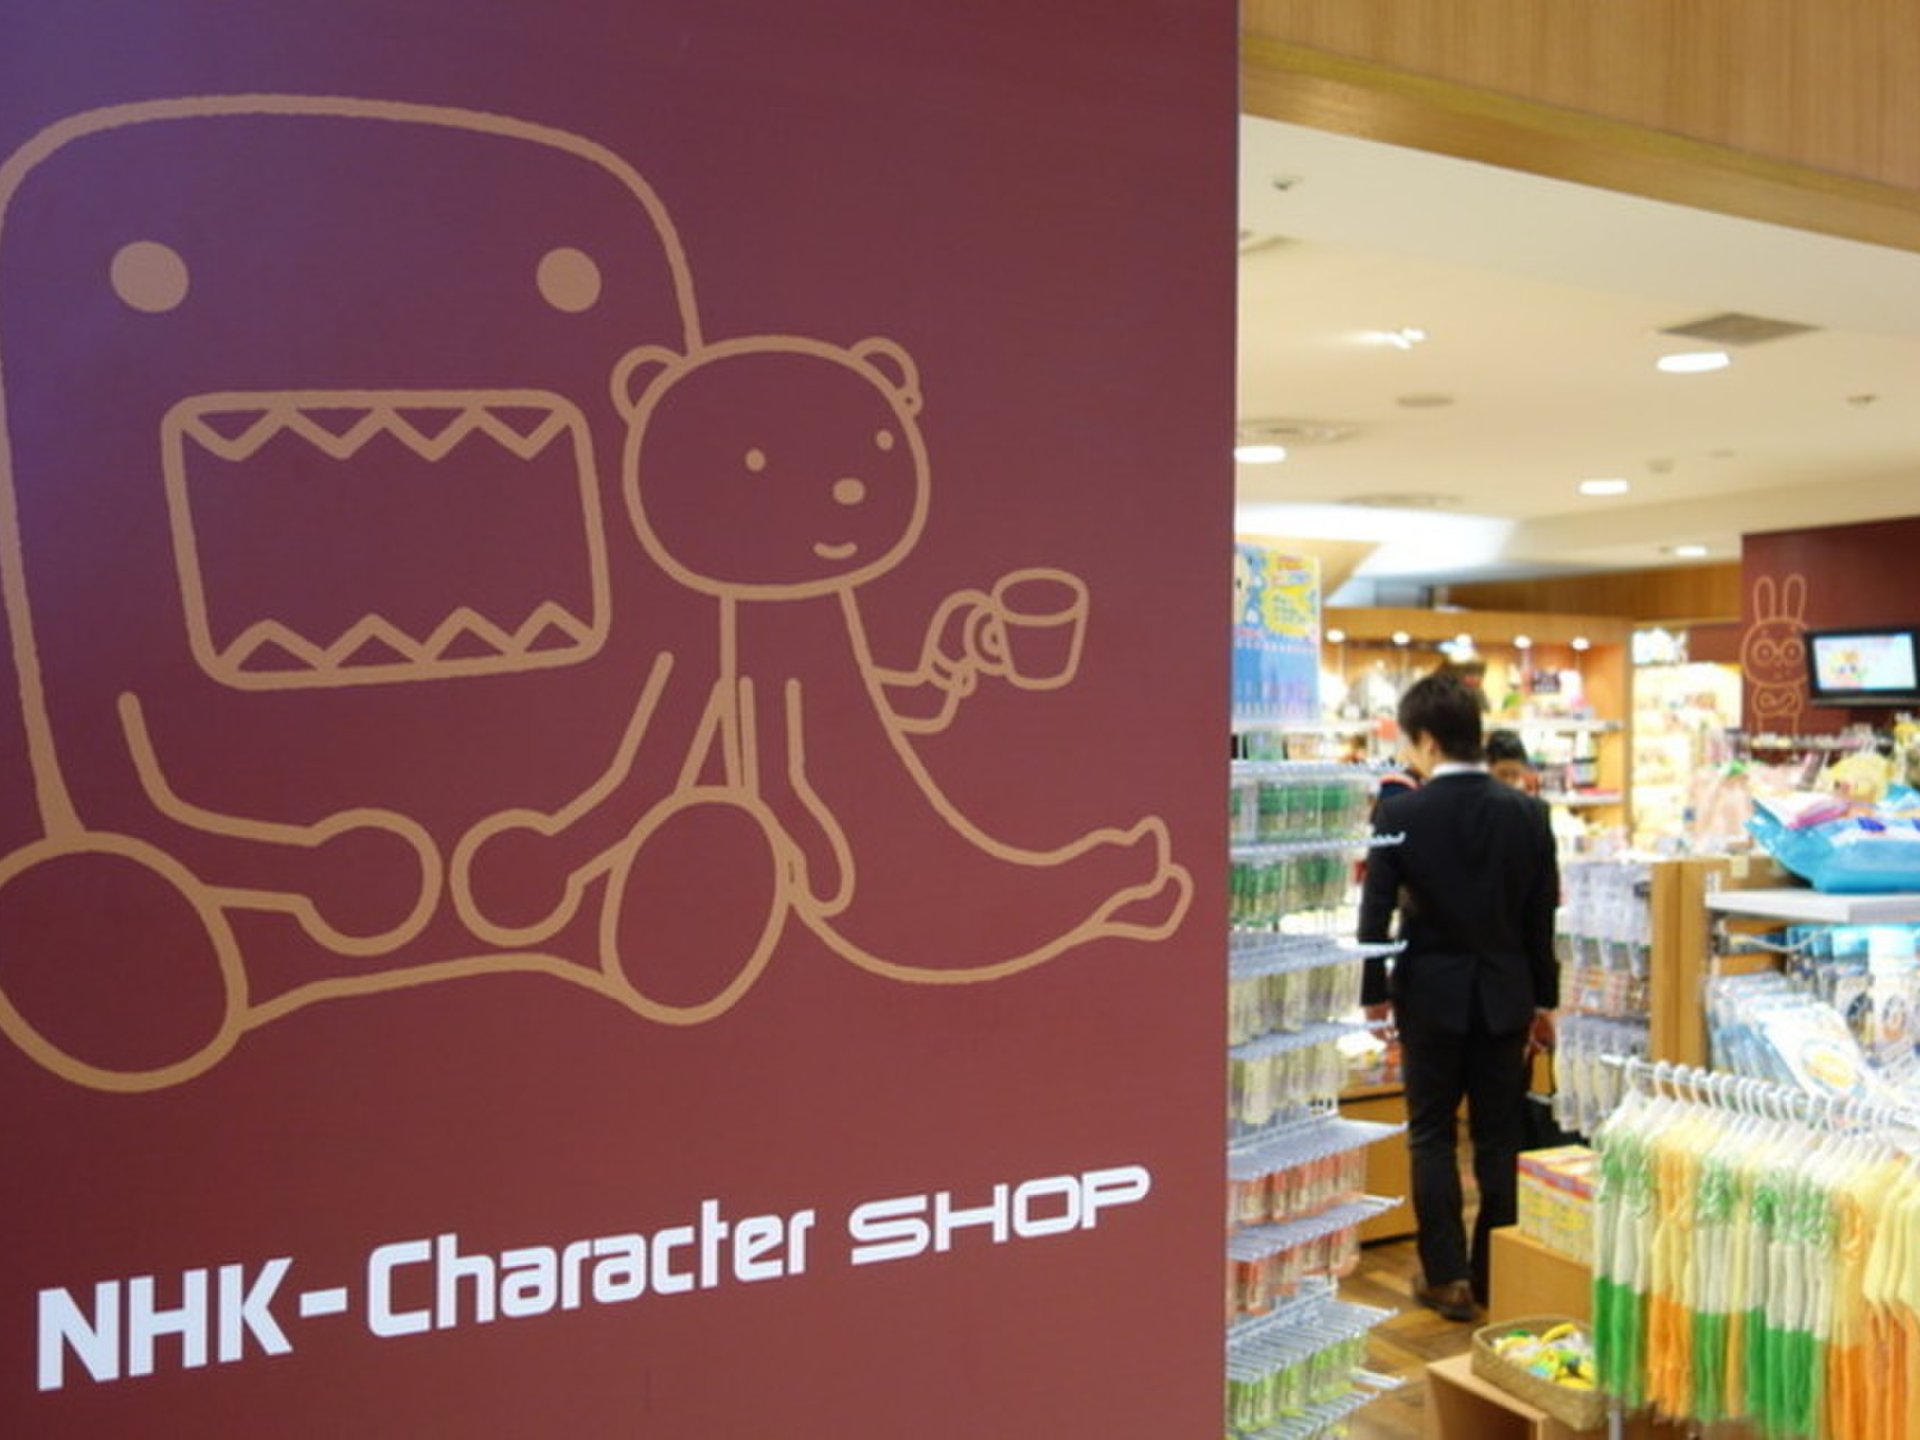 NHK Character SHOP 東京駅店